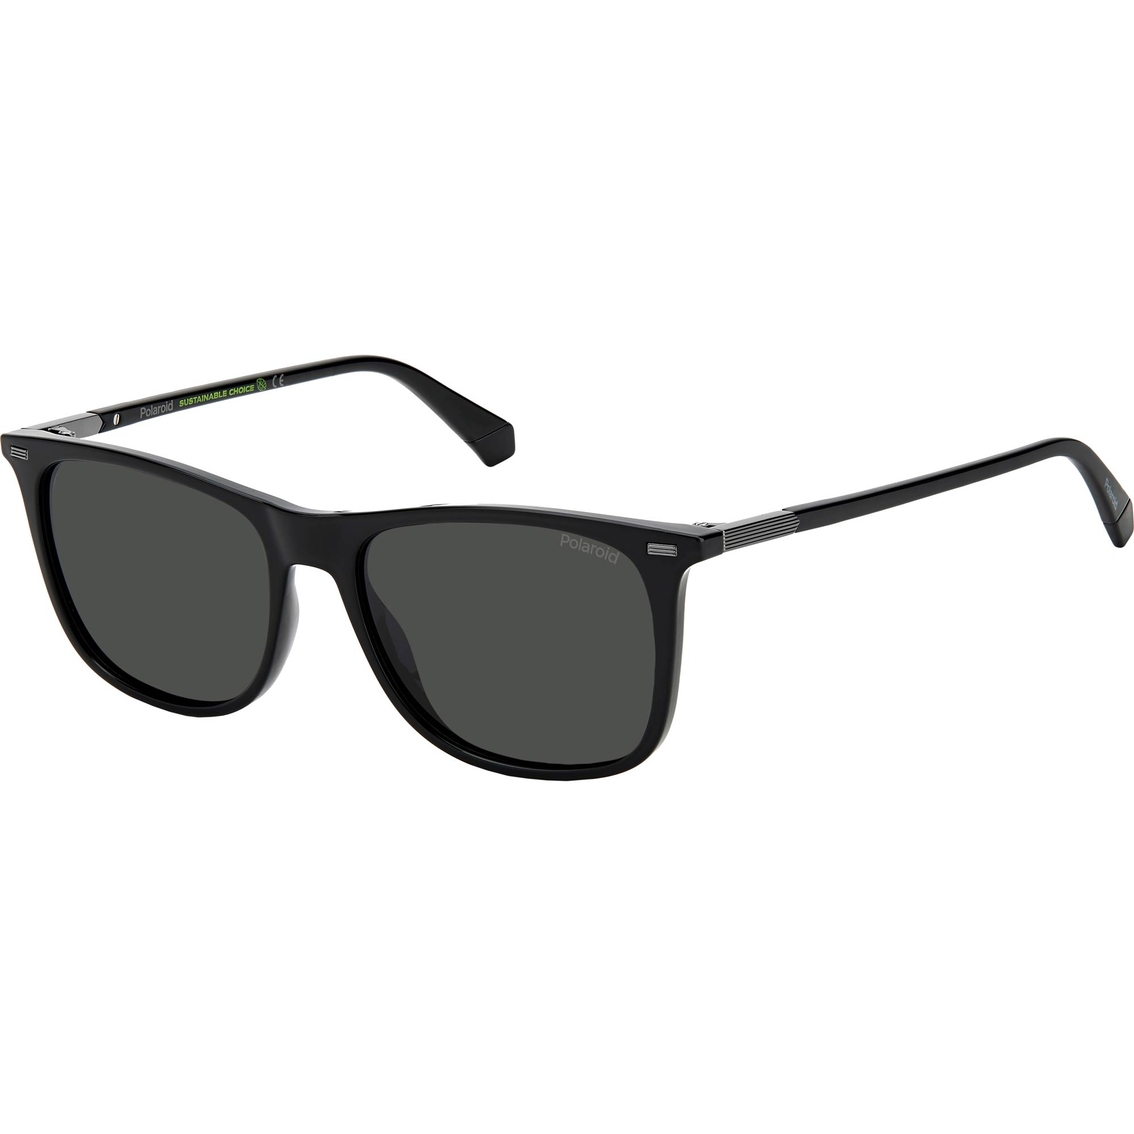 Polaroid Rectangular Sunglasses Pld2109 | Sunglasses | Clothing ...